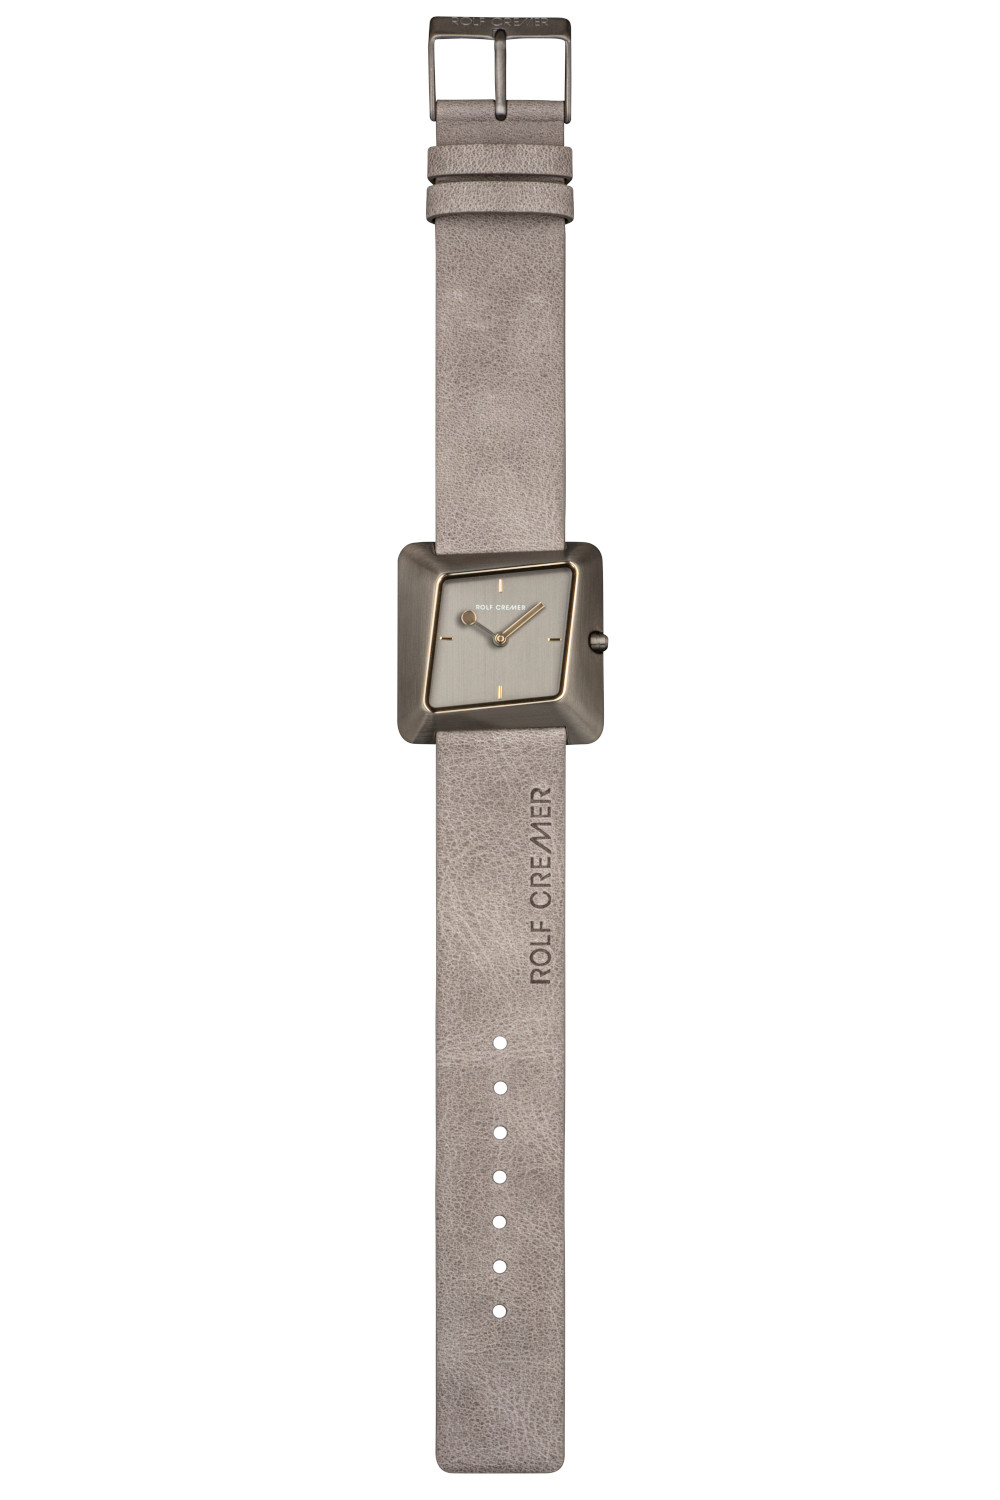 ROLF CREMER Armbanduhr TWISTER Lederband Grau 507904